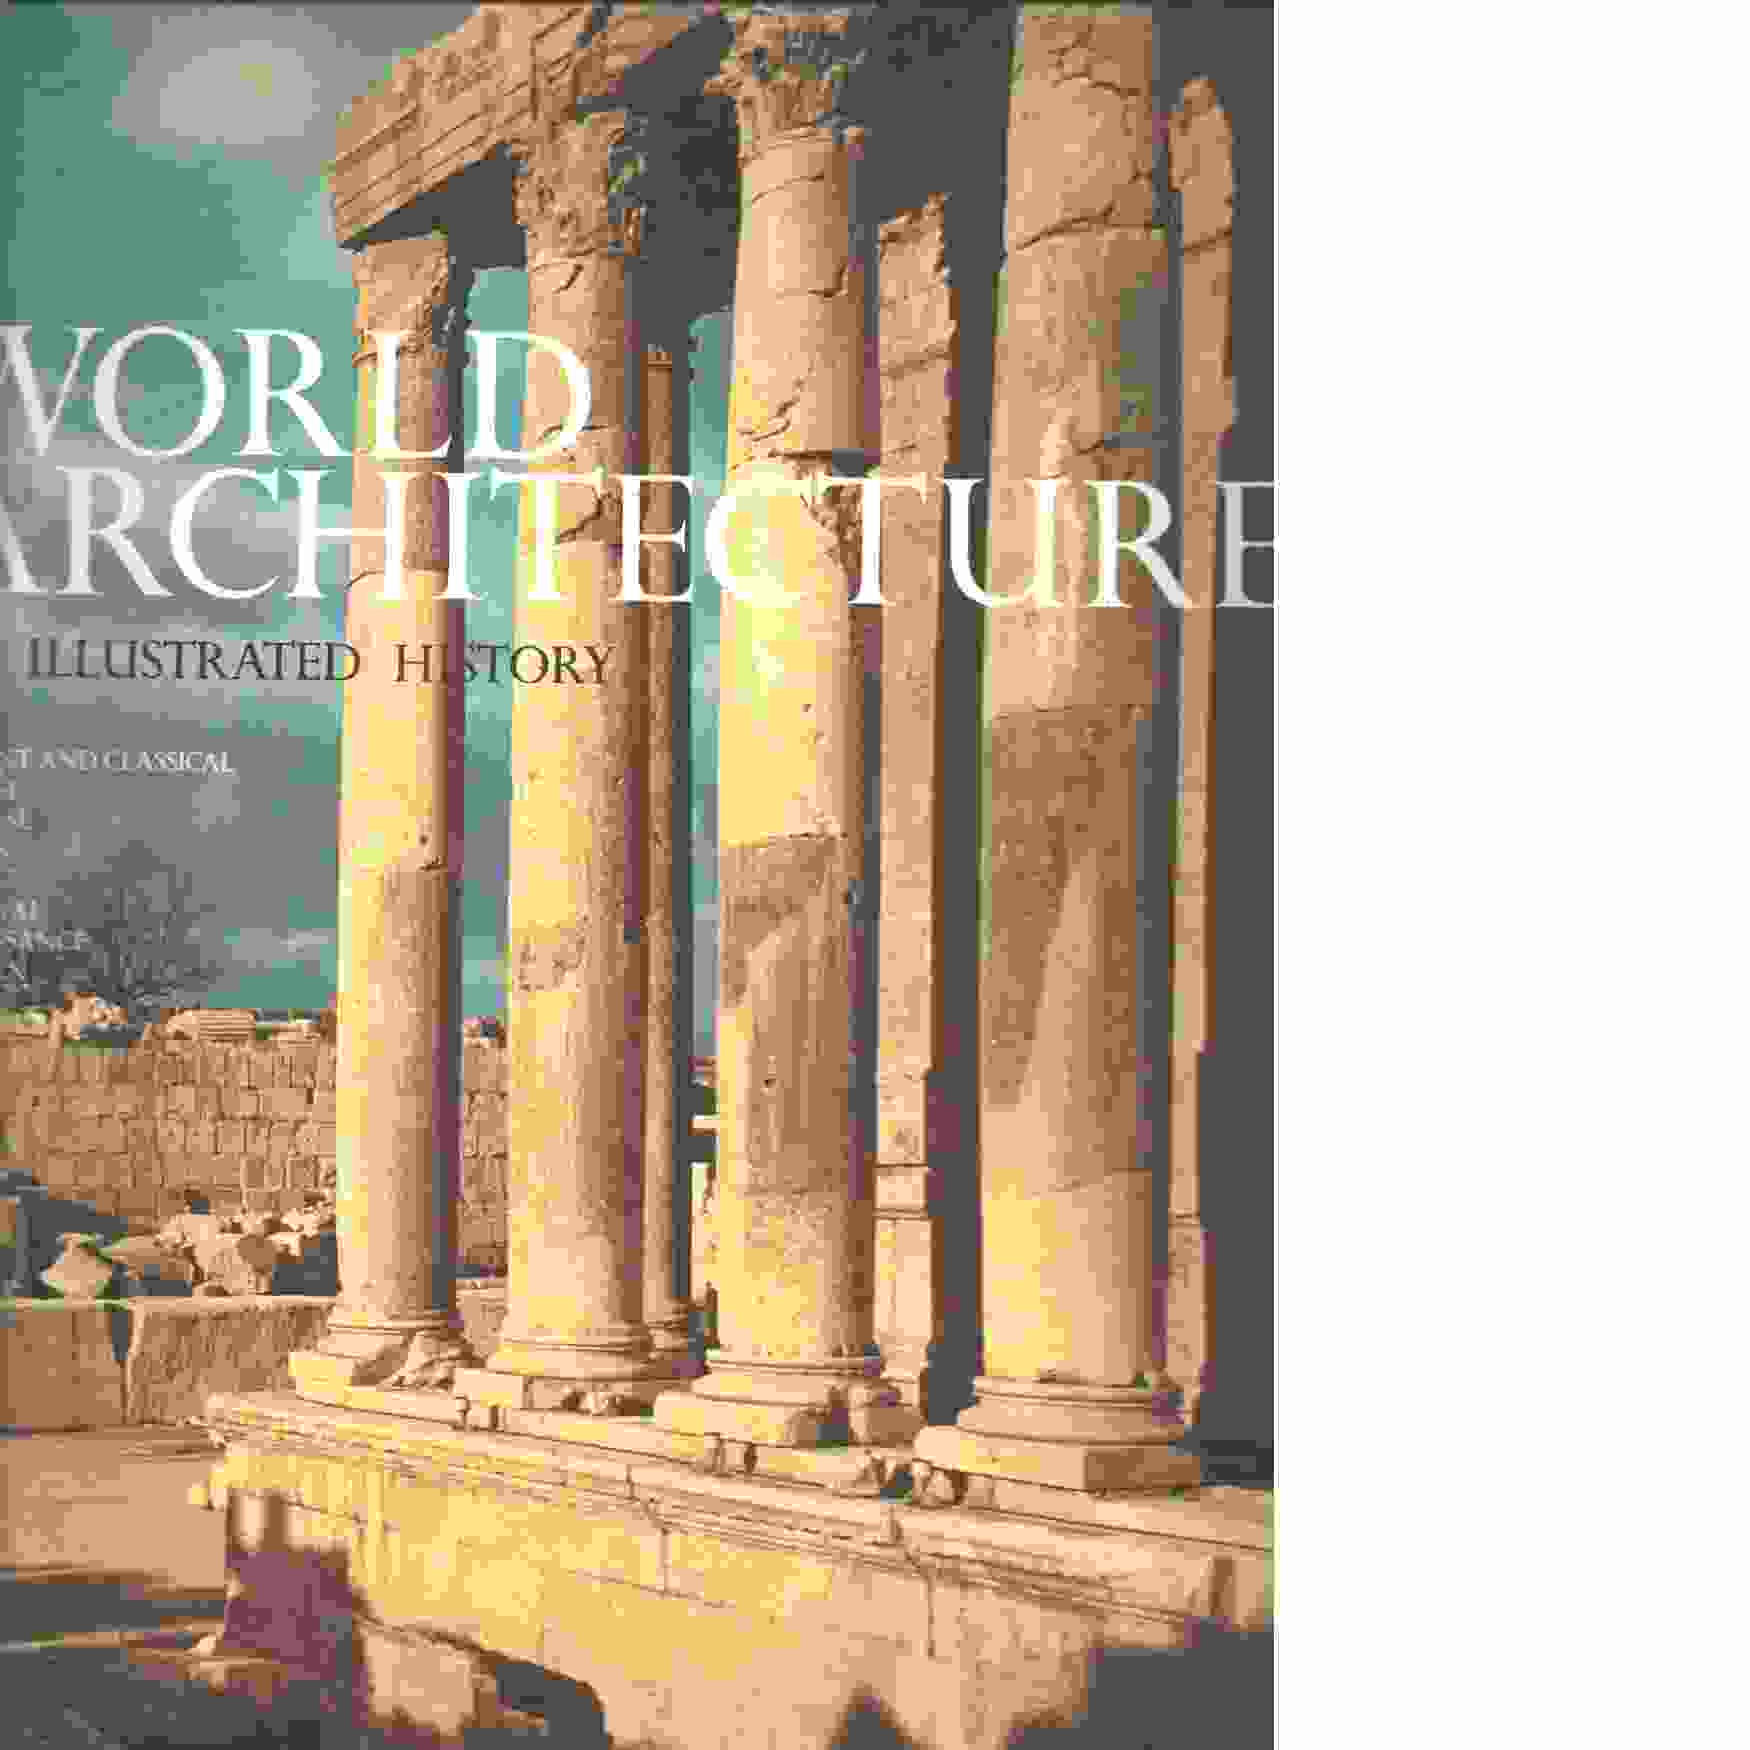 World architecture : an illustrated history -  Lloyd, Seton och   Copplestone, Trewin